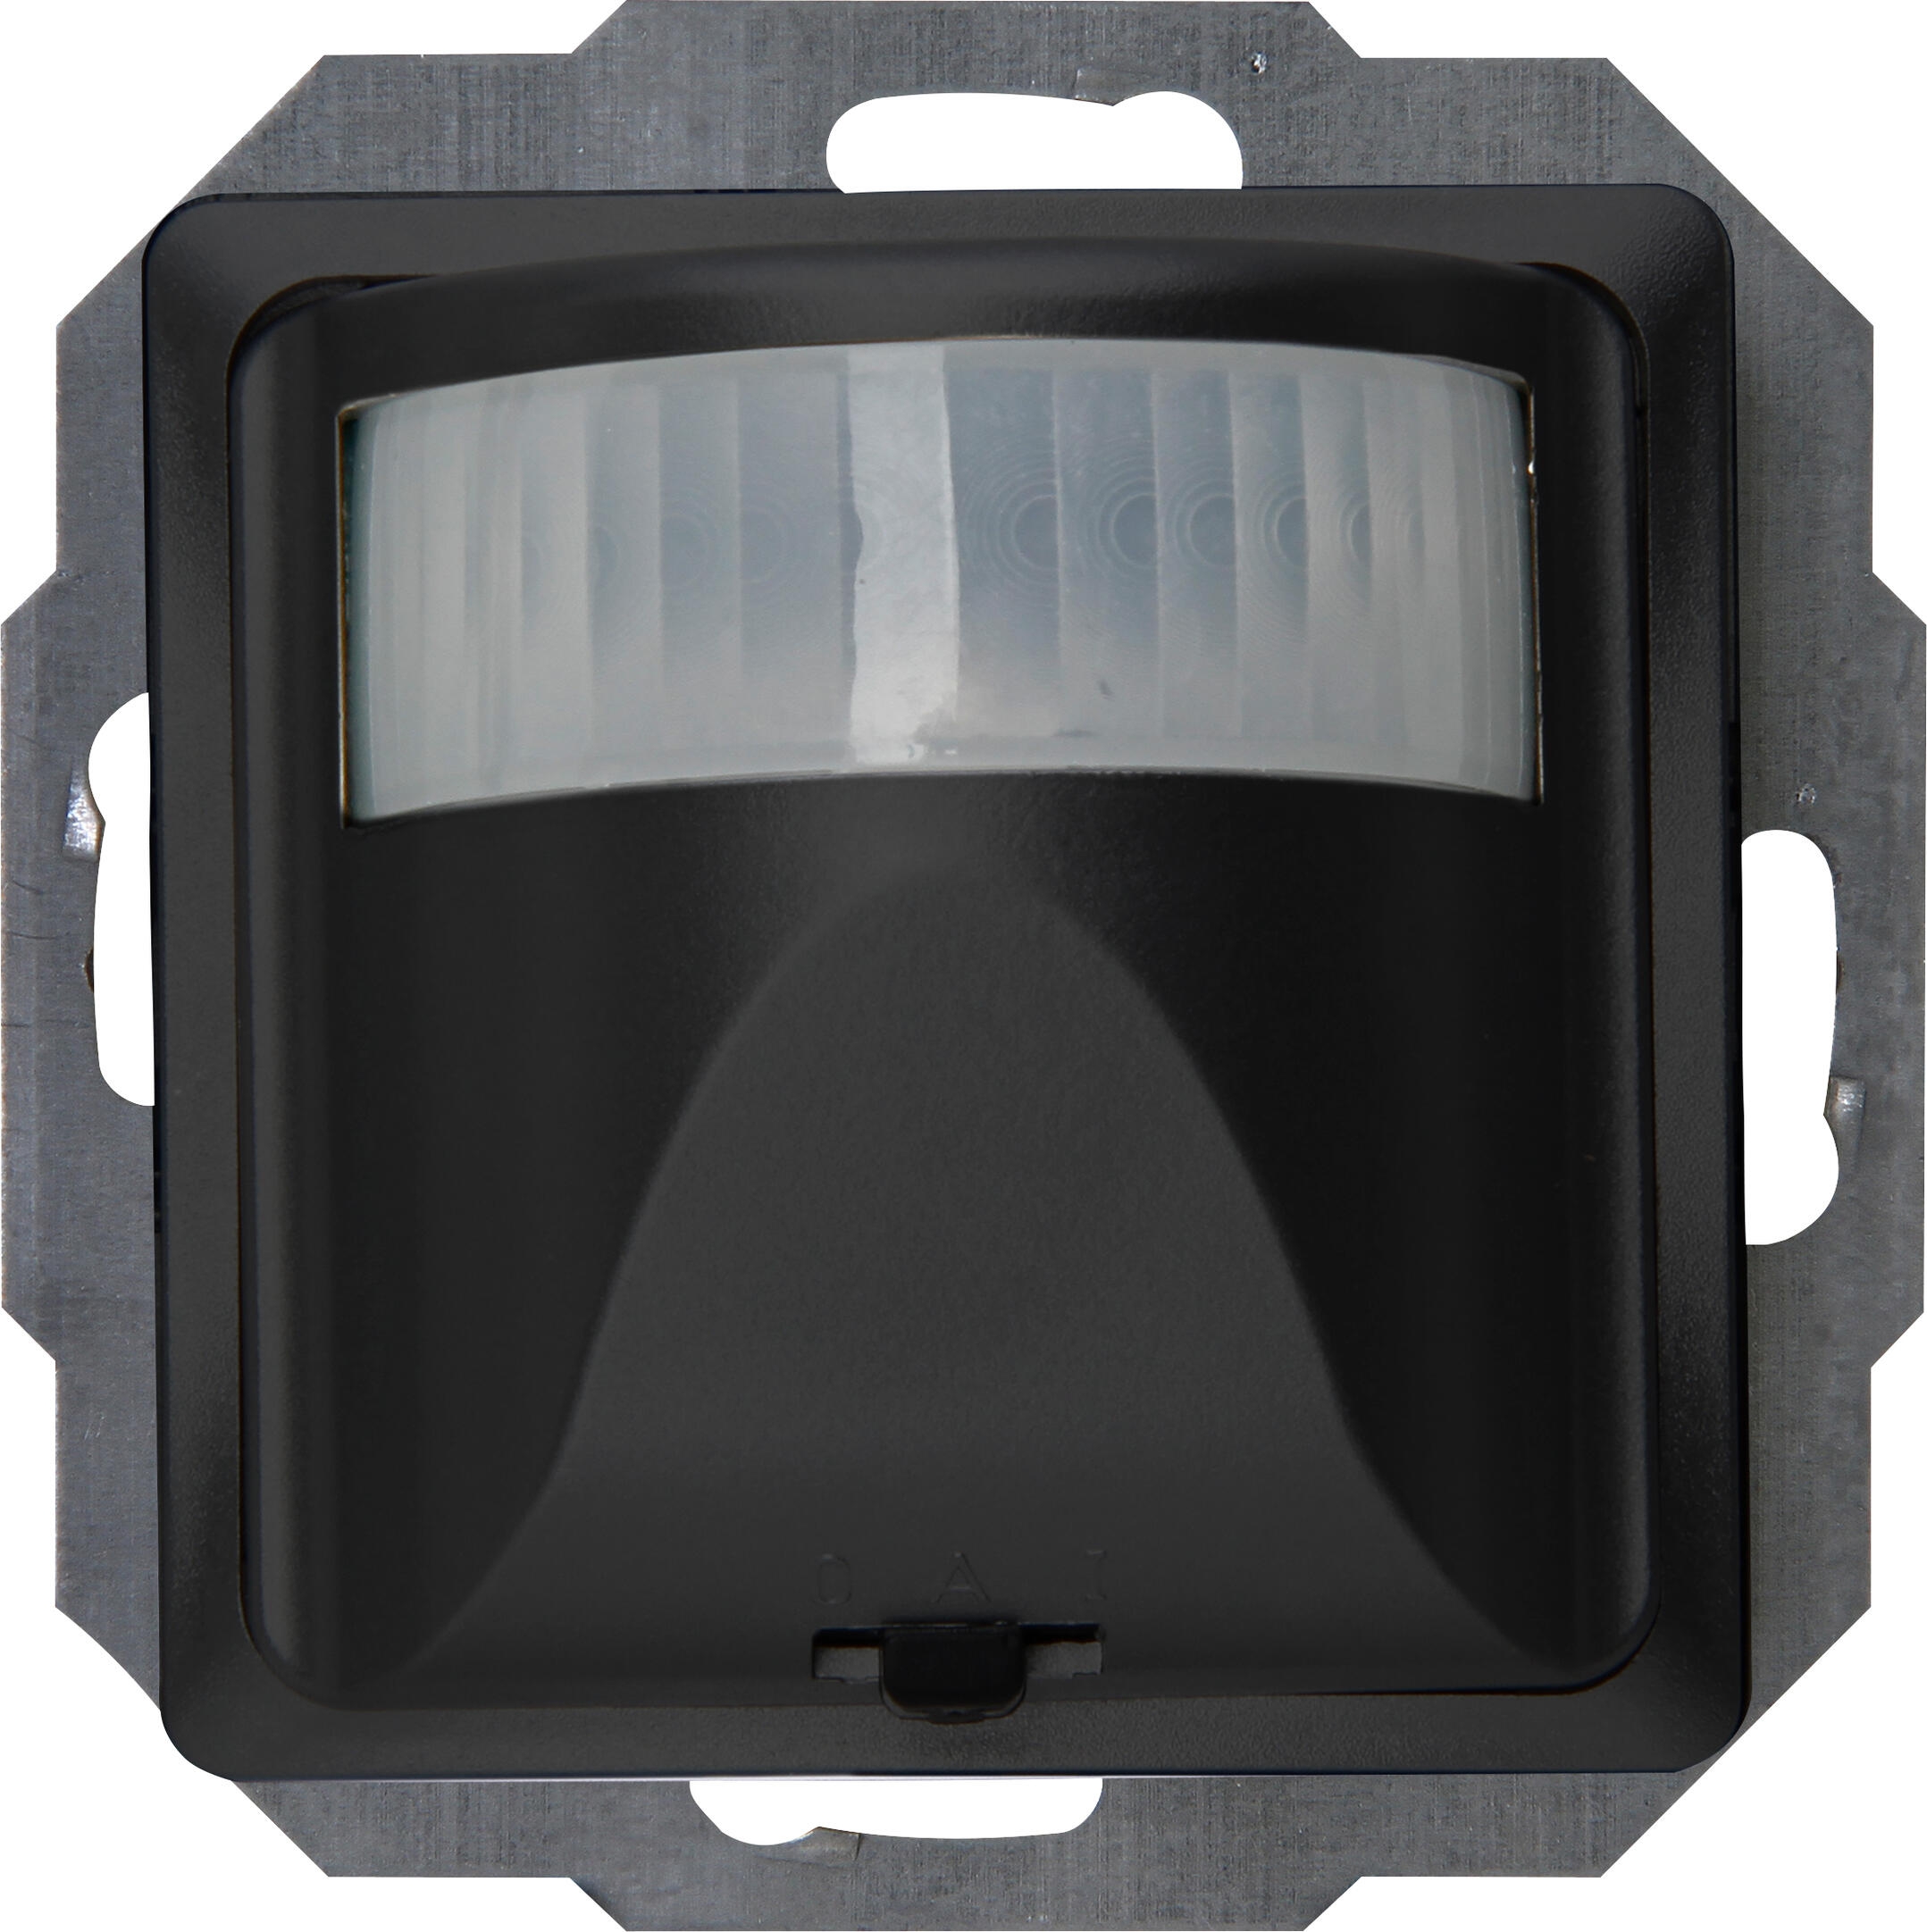 Kopp 805850008 HK05/HK07 - INFRAcontrol T 180°, Infrarot-Bewegungsmelder, 2-Draht-Gerät, 40–400W, 50x50mm, Farbe: schwarz matt